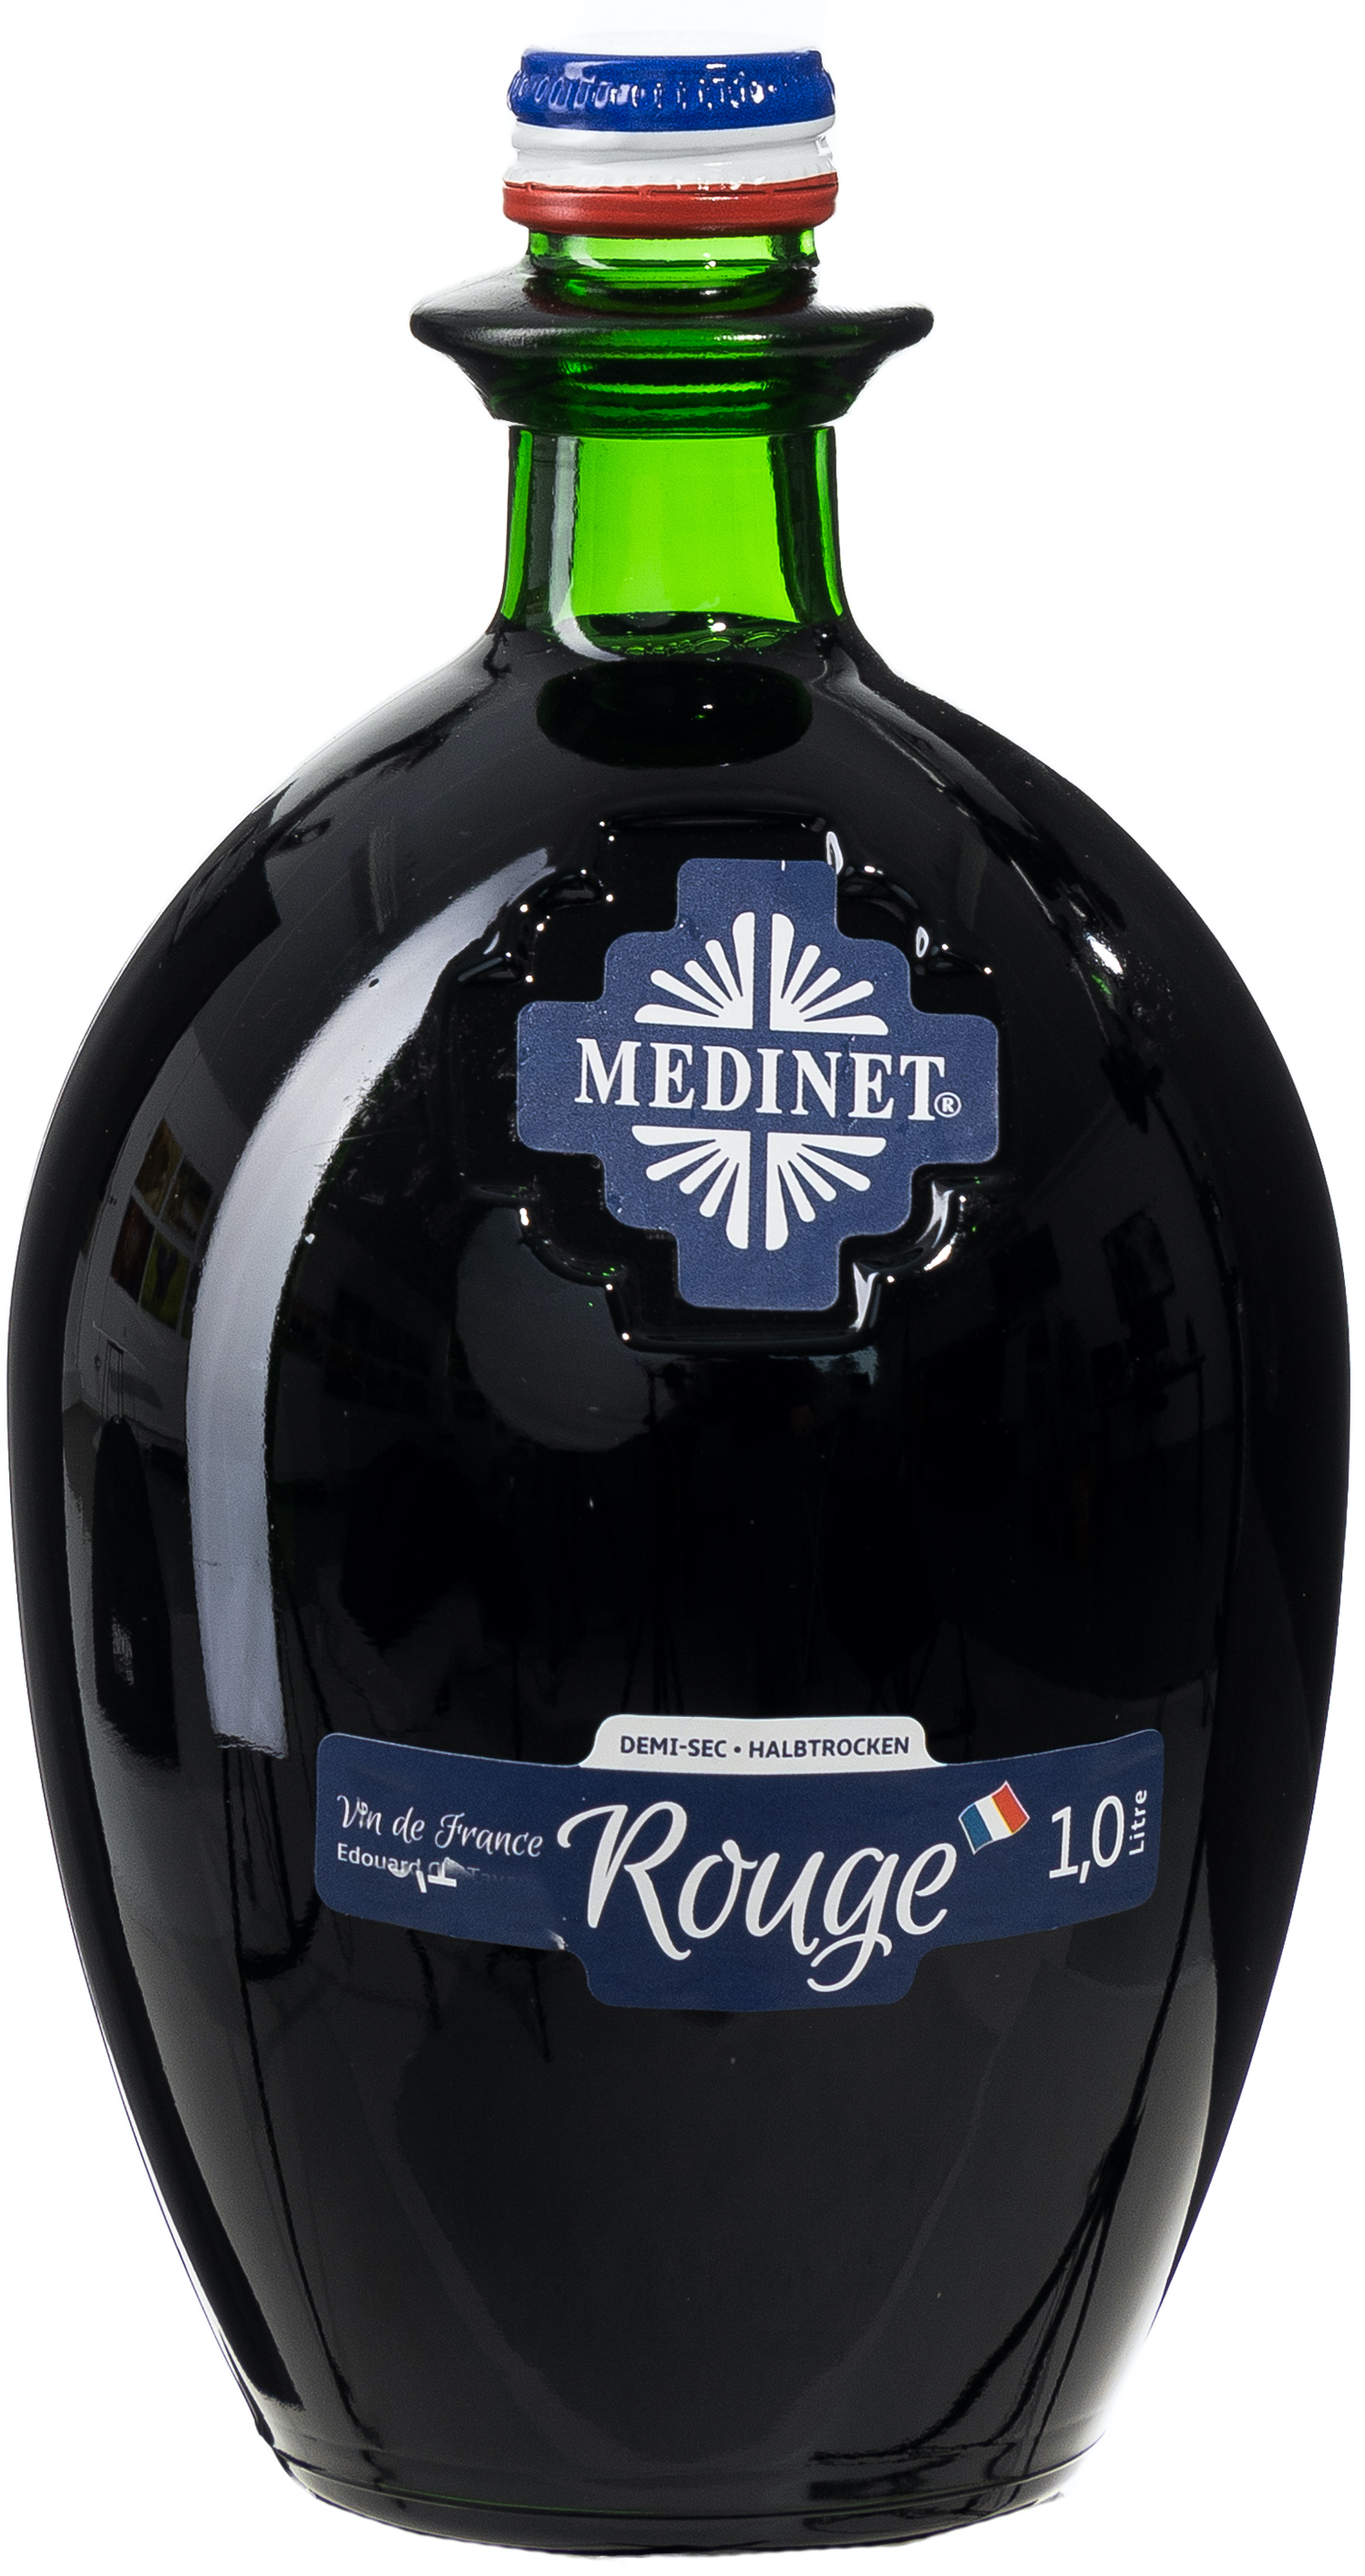 Medinet Rouge halbtrocken 12% vol. 1,0L